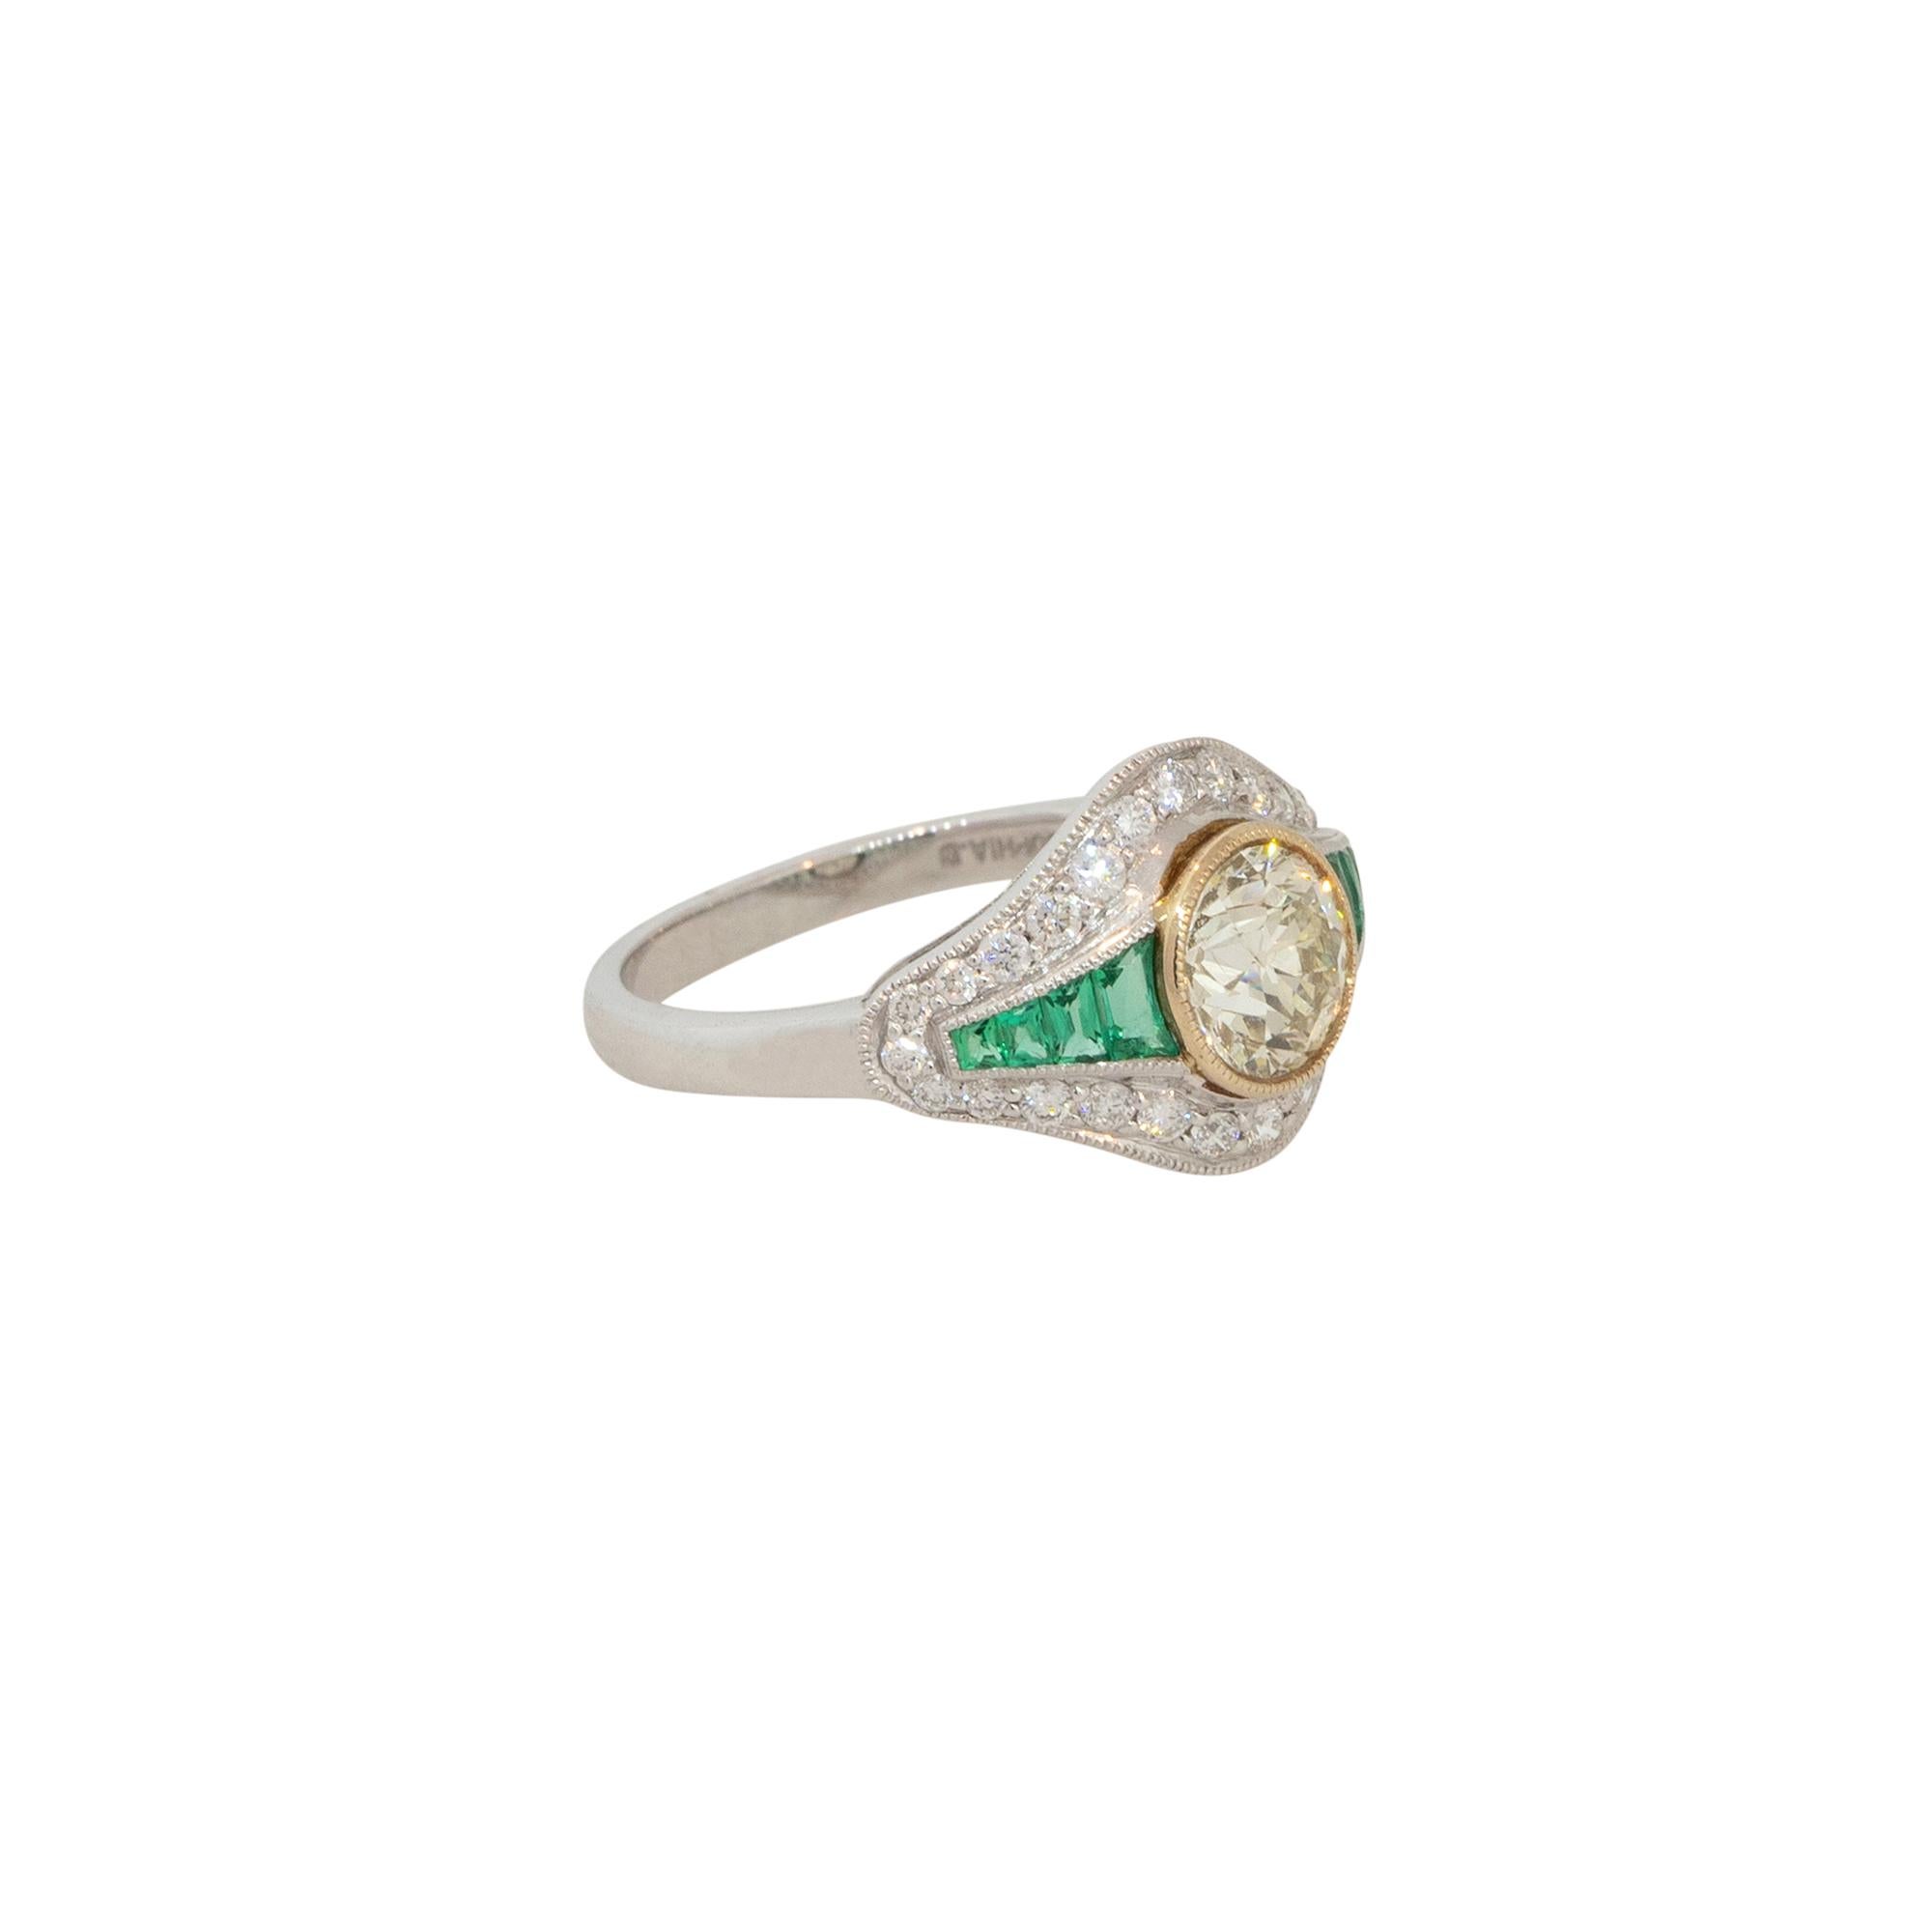 Platinum 1.46ctw Diamond and Emerald Art Deco Ring
Material: Platinum
Diamond Details: Approx. 1.46ctw of Round Brilliant Cut Diamonds. Center Diamond is L/M in color and VS2 in clarity
Gemstone Details: Approx. 0.24ctw of Baguette Cut Emeralds
Ring